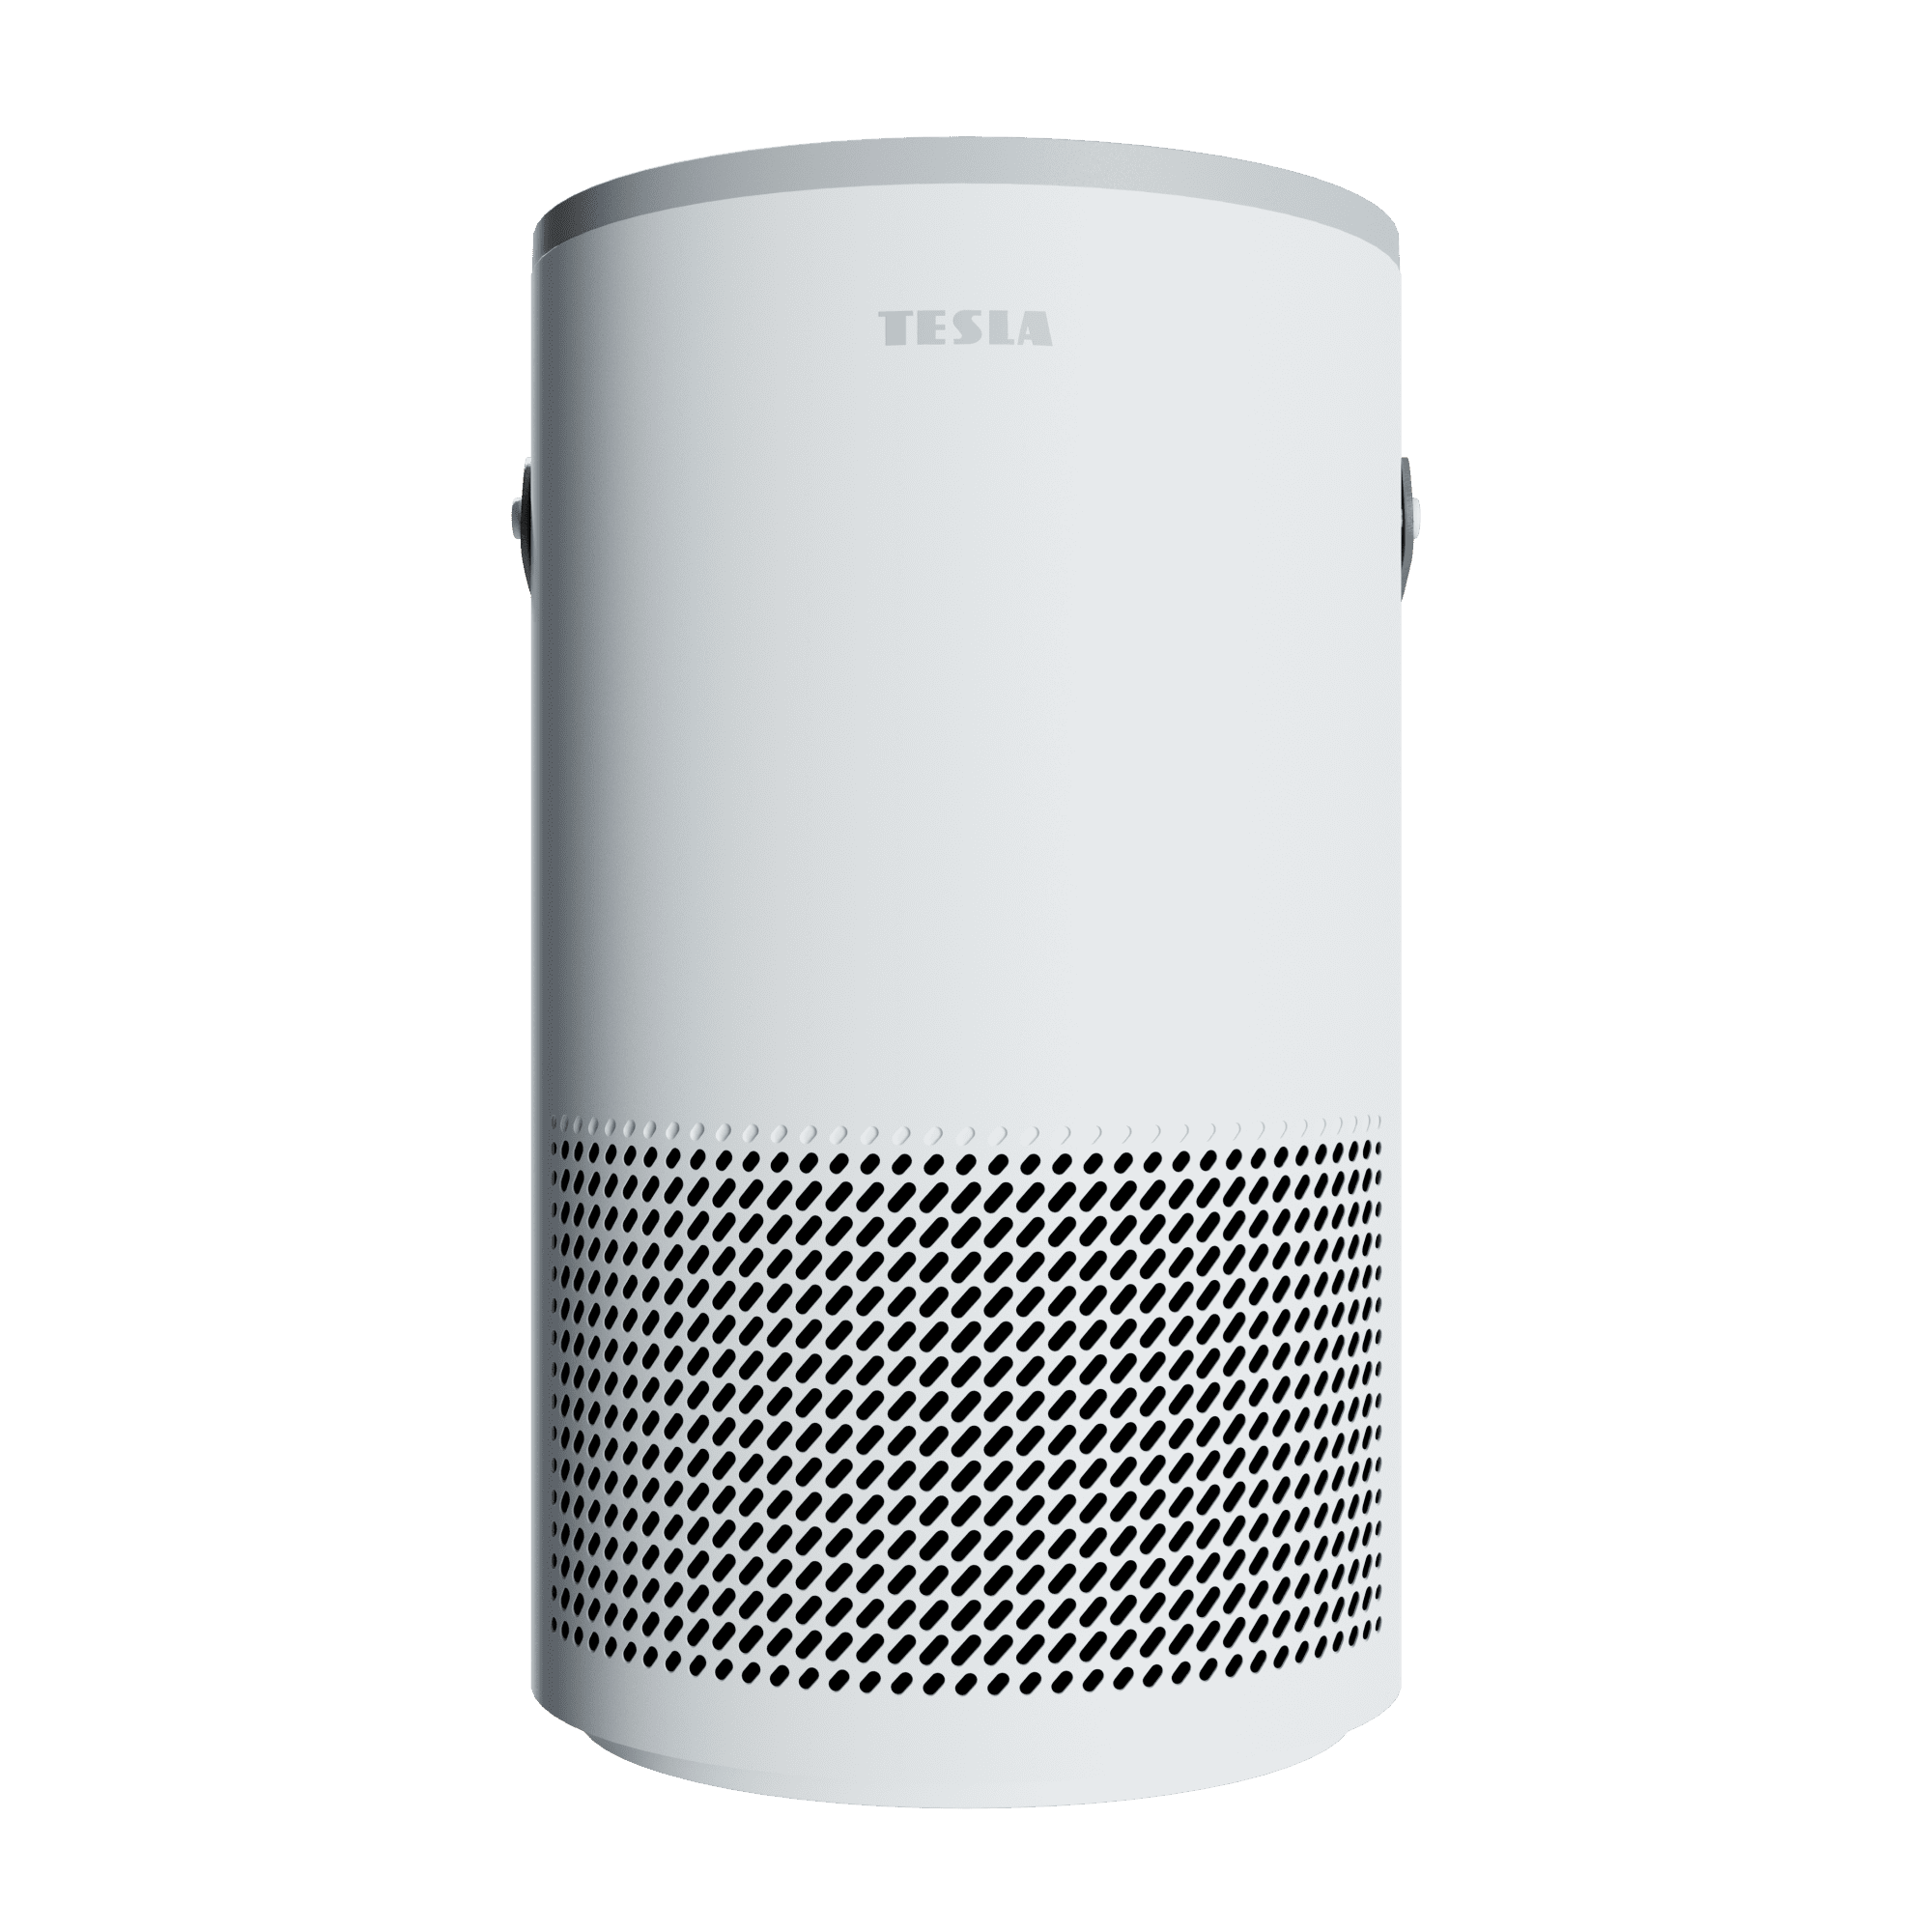   Tesla-Smart Air Purifier S200W